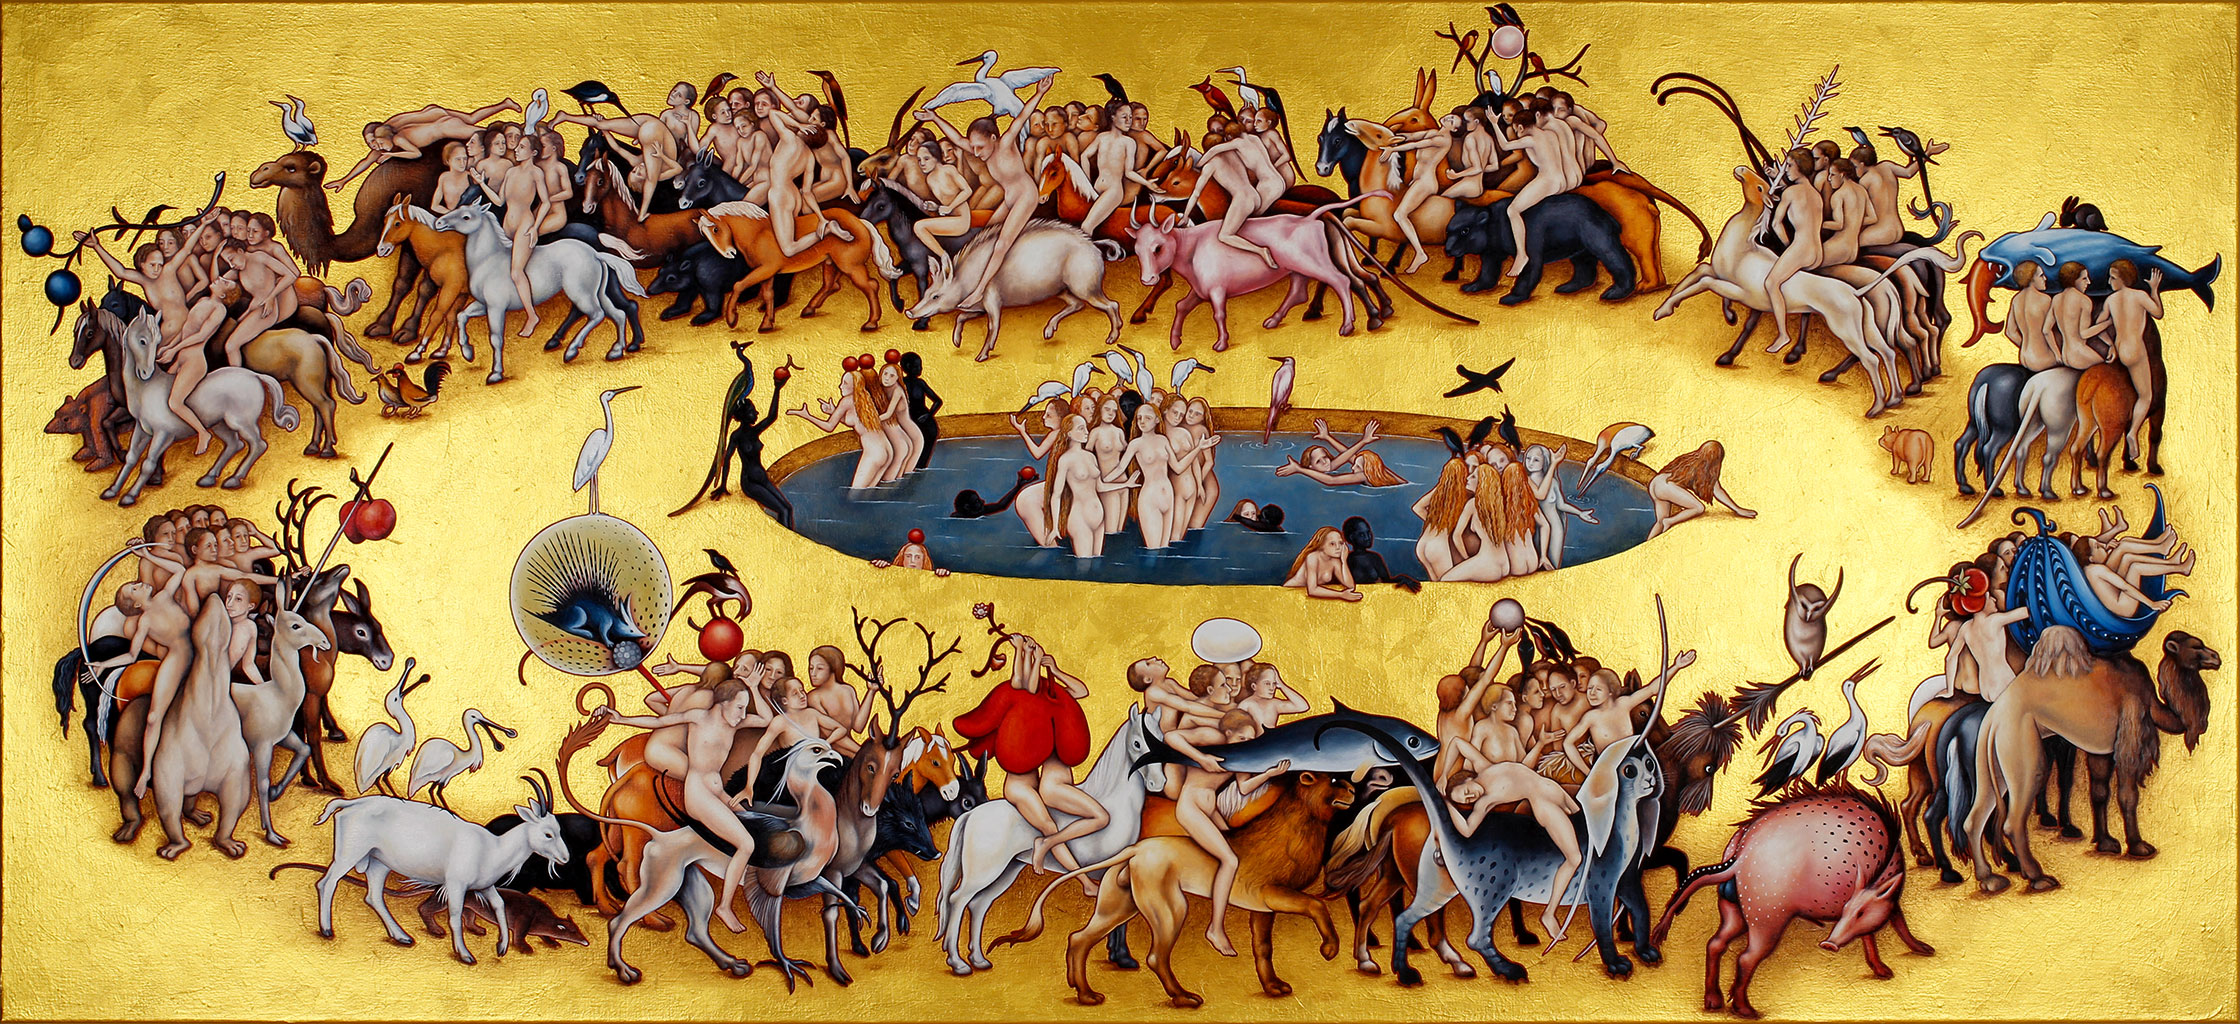 Annette von der Bey, naked men ride animals in a circle around a fountain with naked women